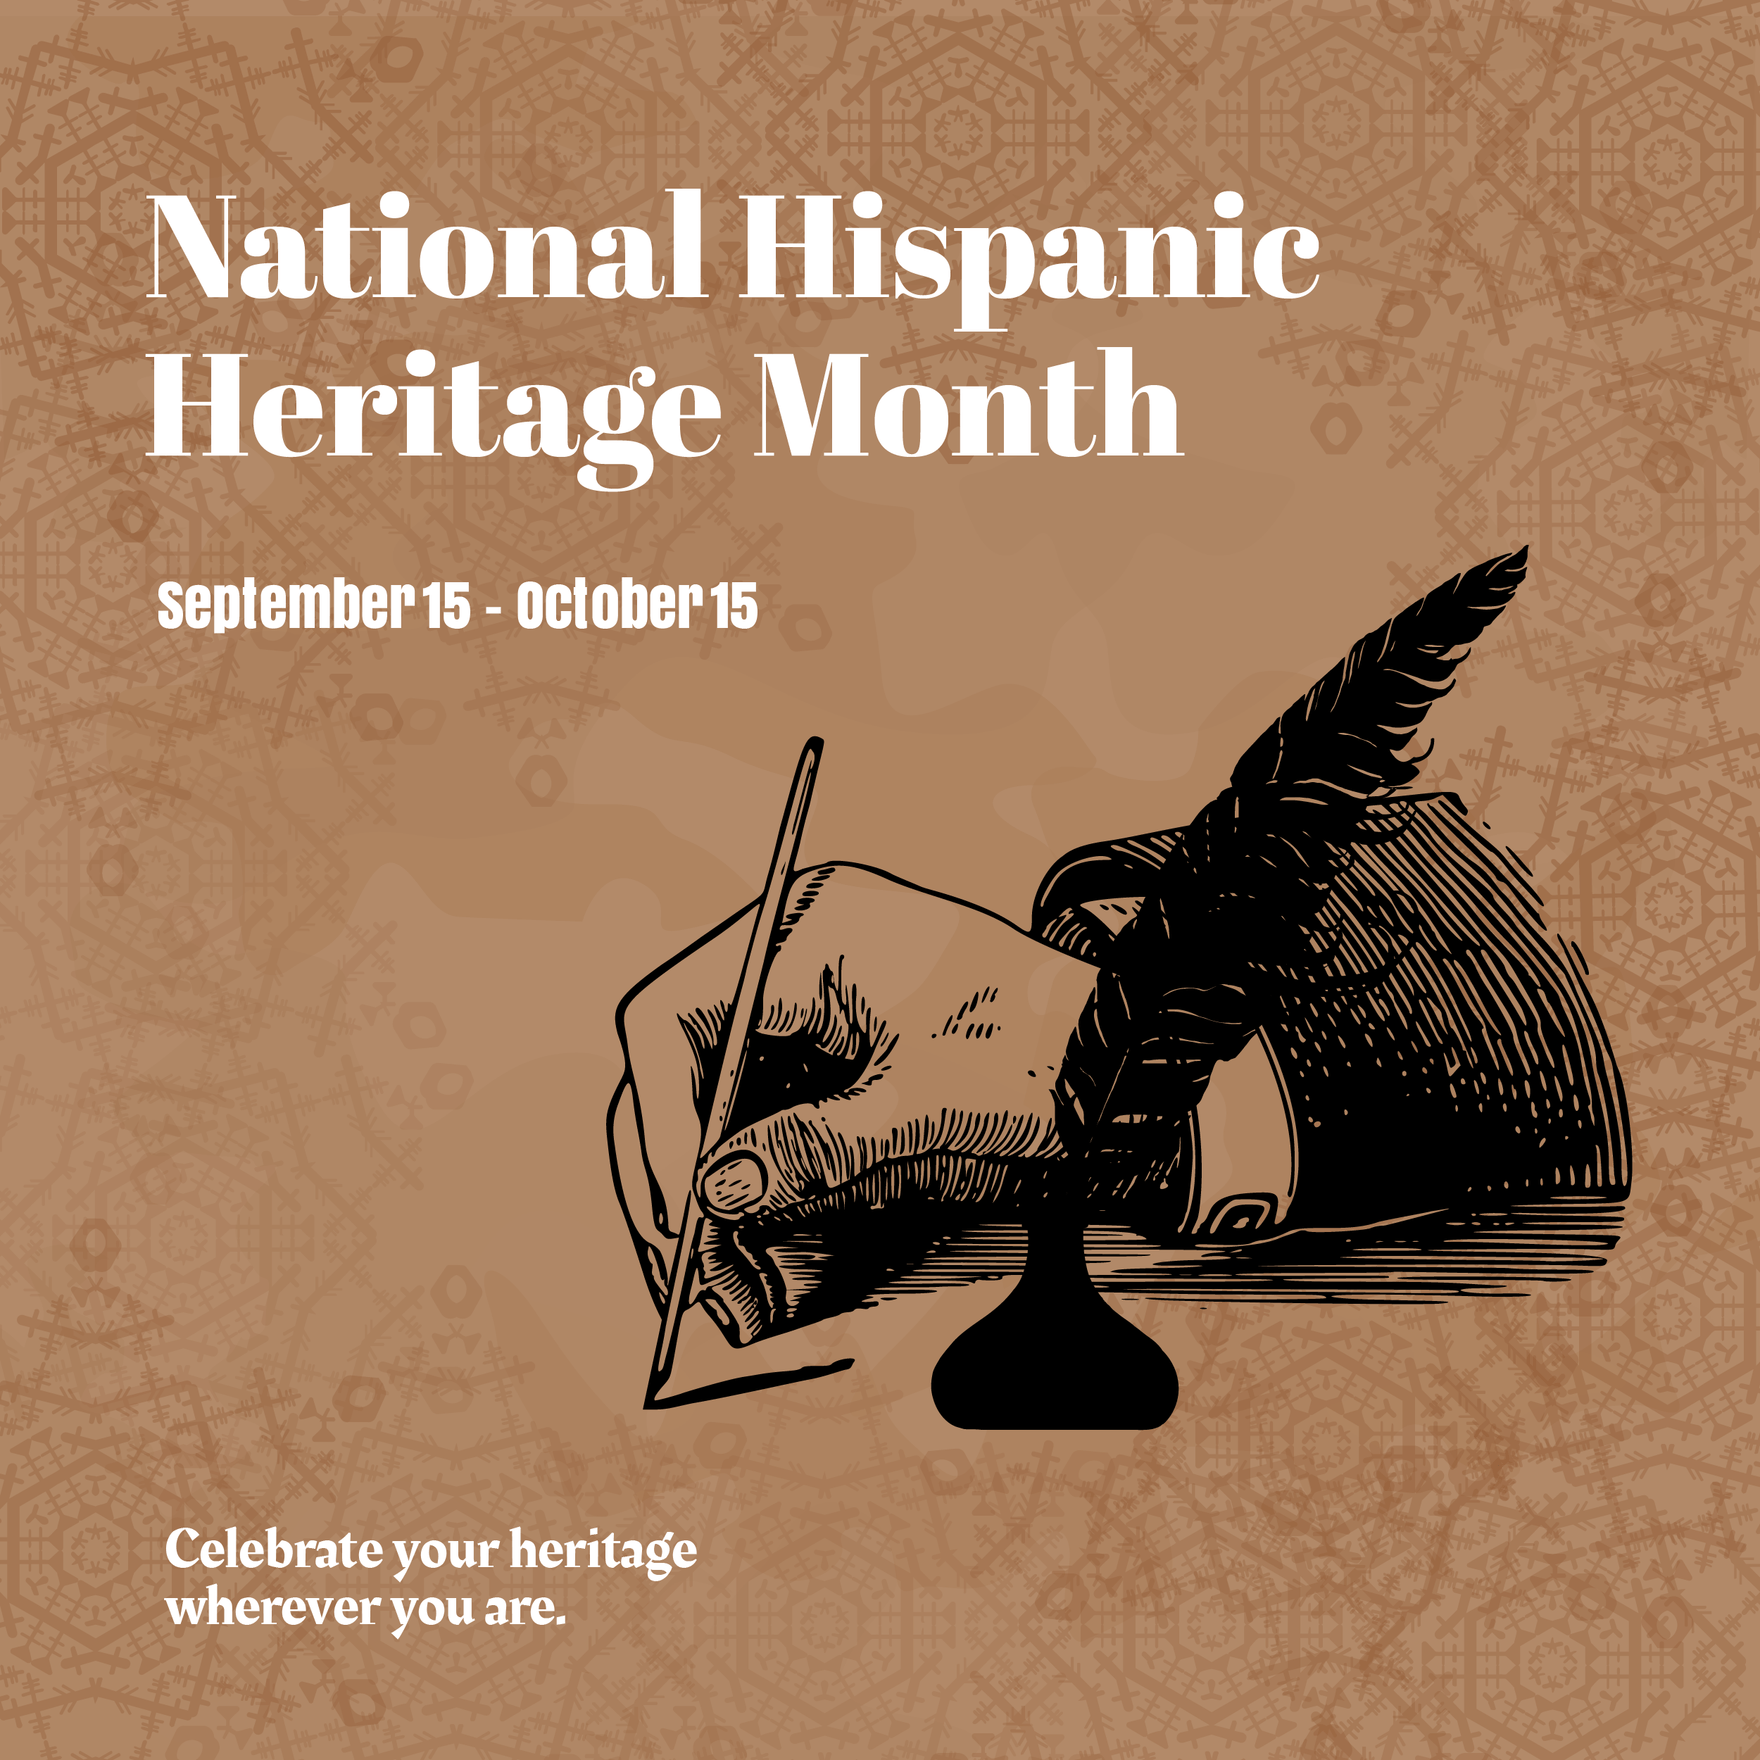 Free National Hispanic Heritage Month Whatsapp Post in Illustrator, PSD, EPS, SVG, JPG, PNG